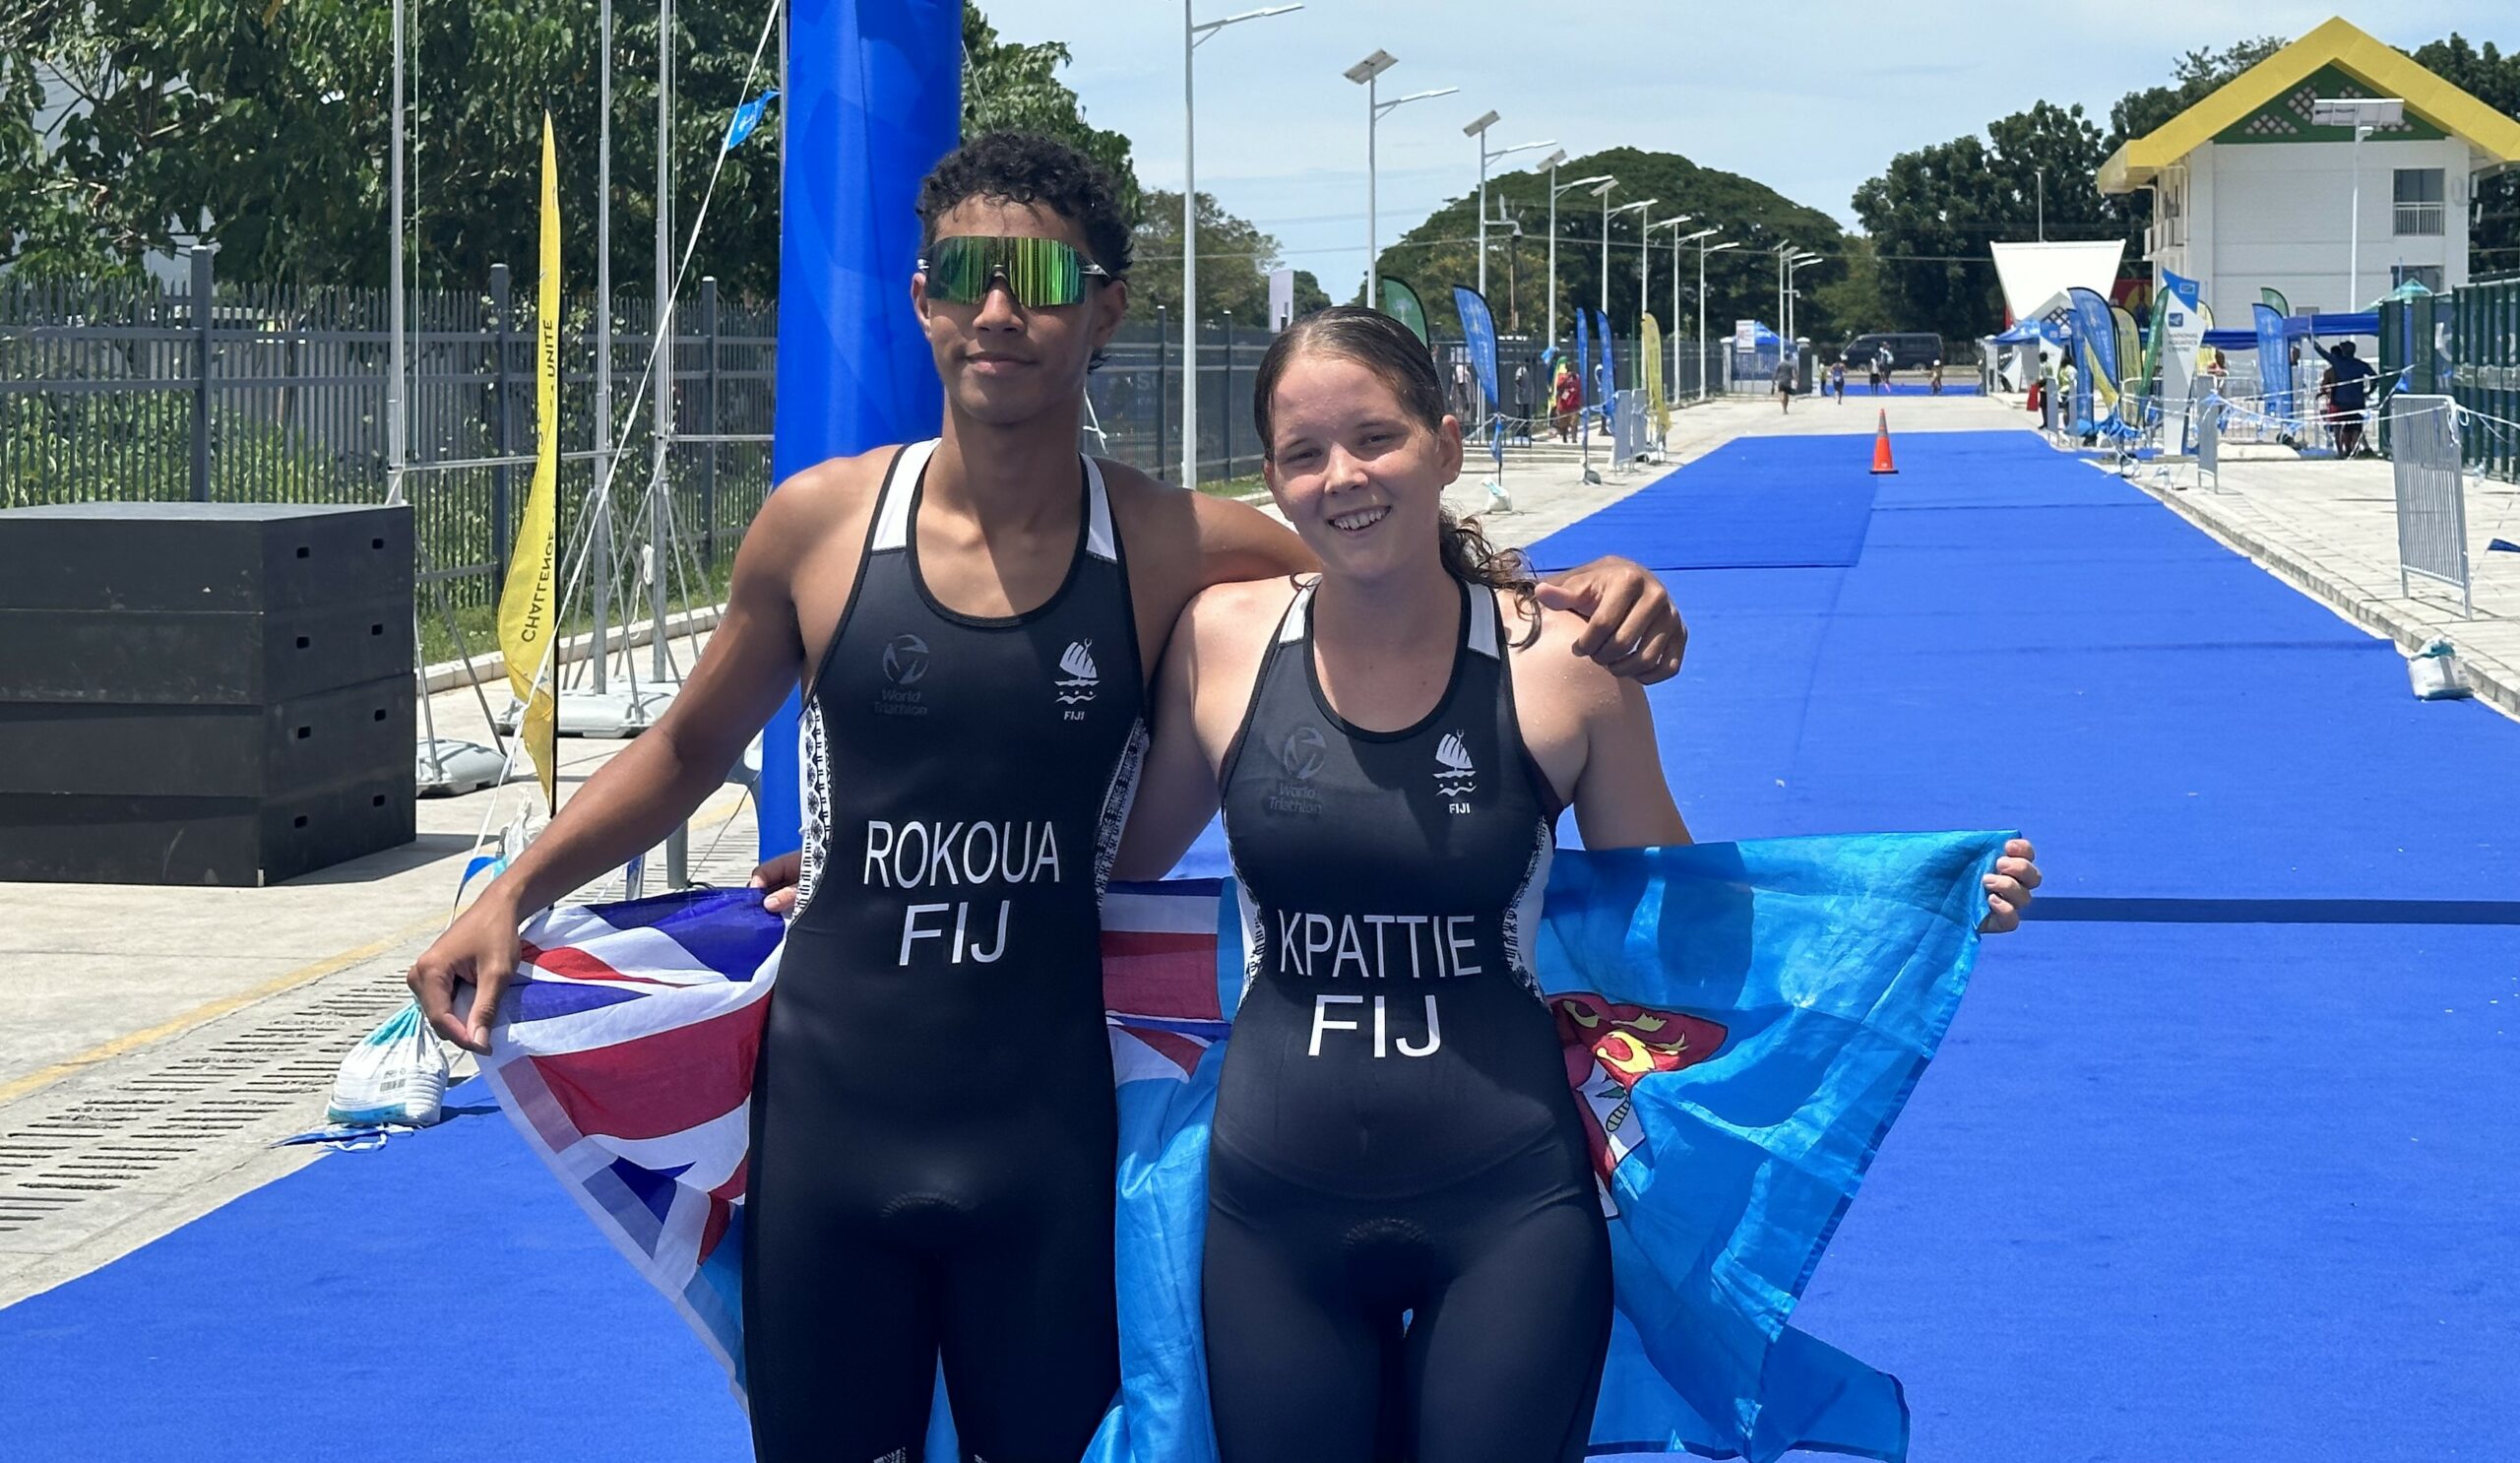 Two triathlon athletes holding a Fijian flag